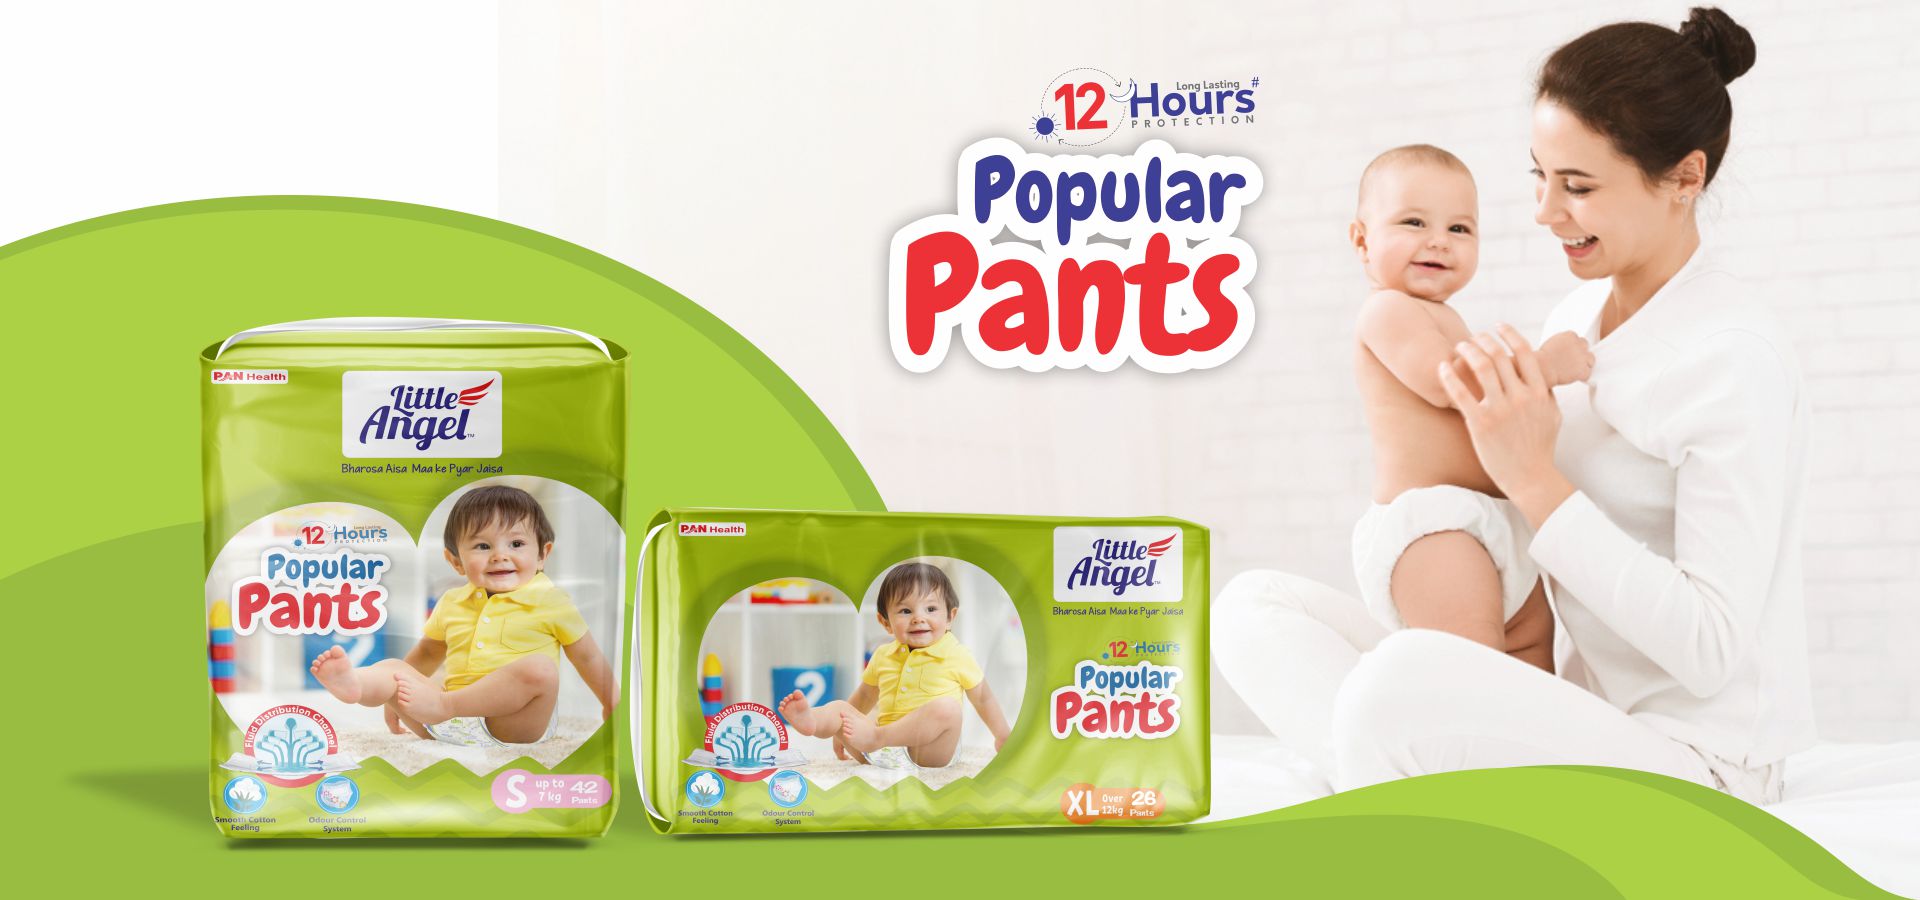 Popular Pants from Little Angel, Popular Pants from Little Angel | 12 Hours Protection Popular Pants Diaper from Little Angel